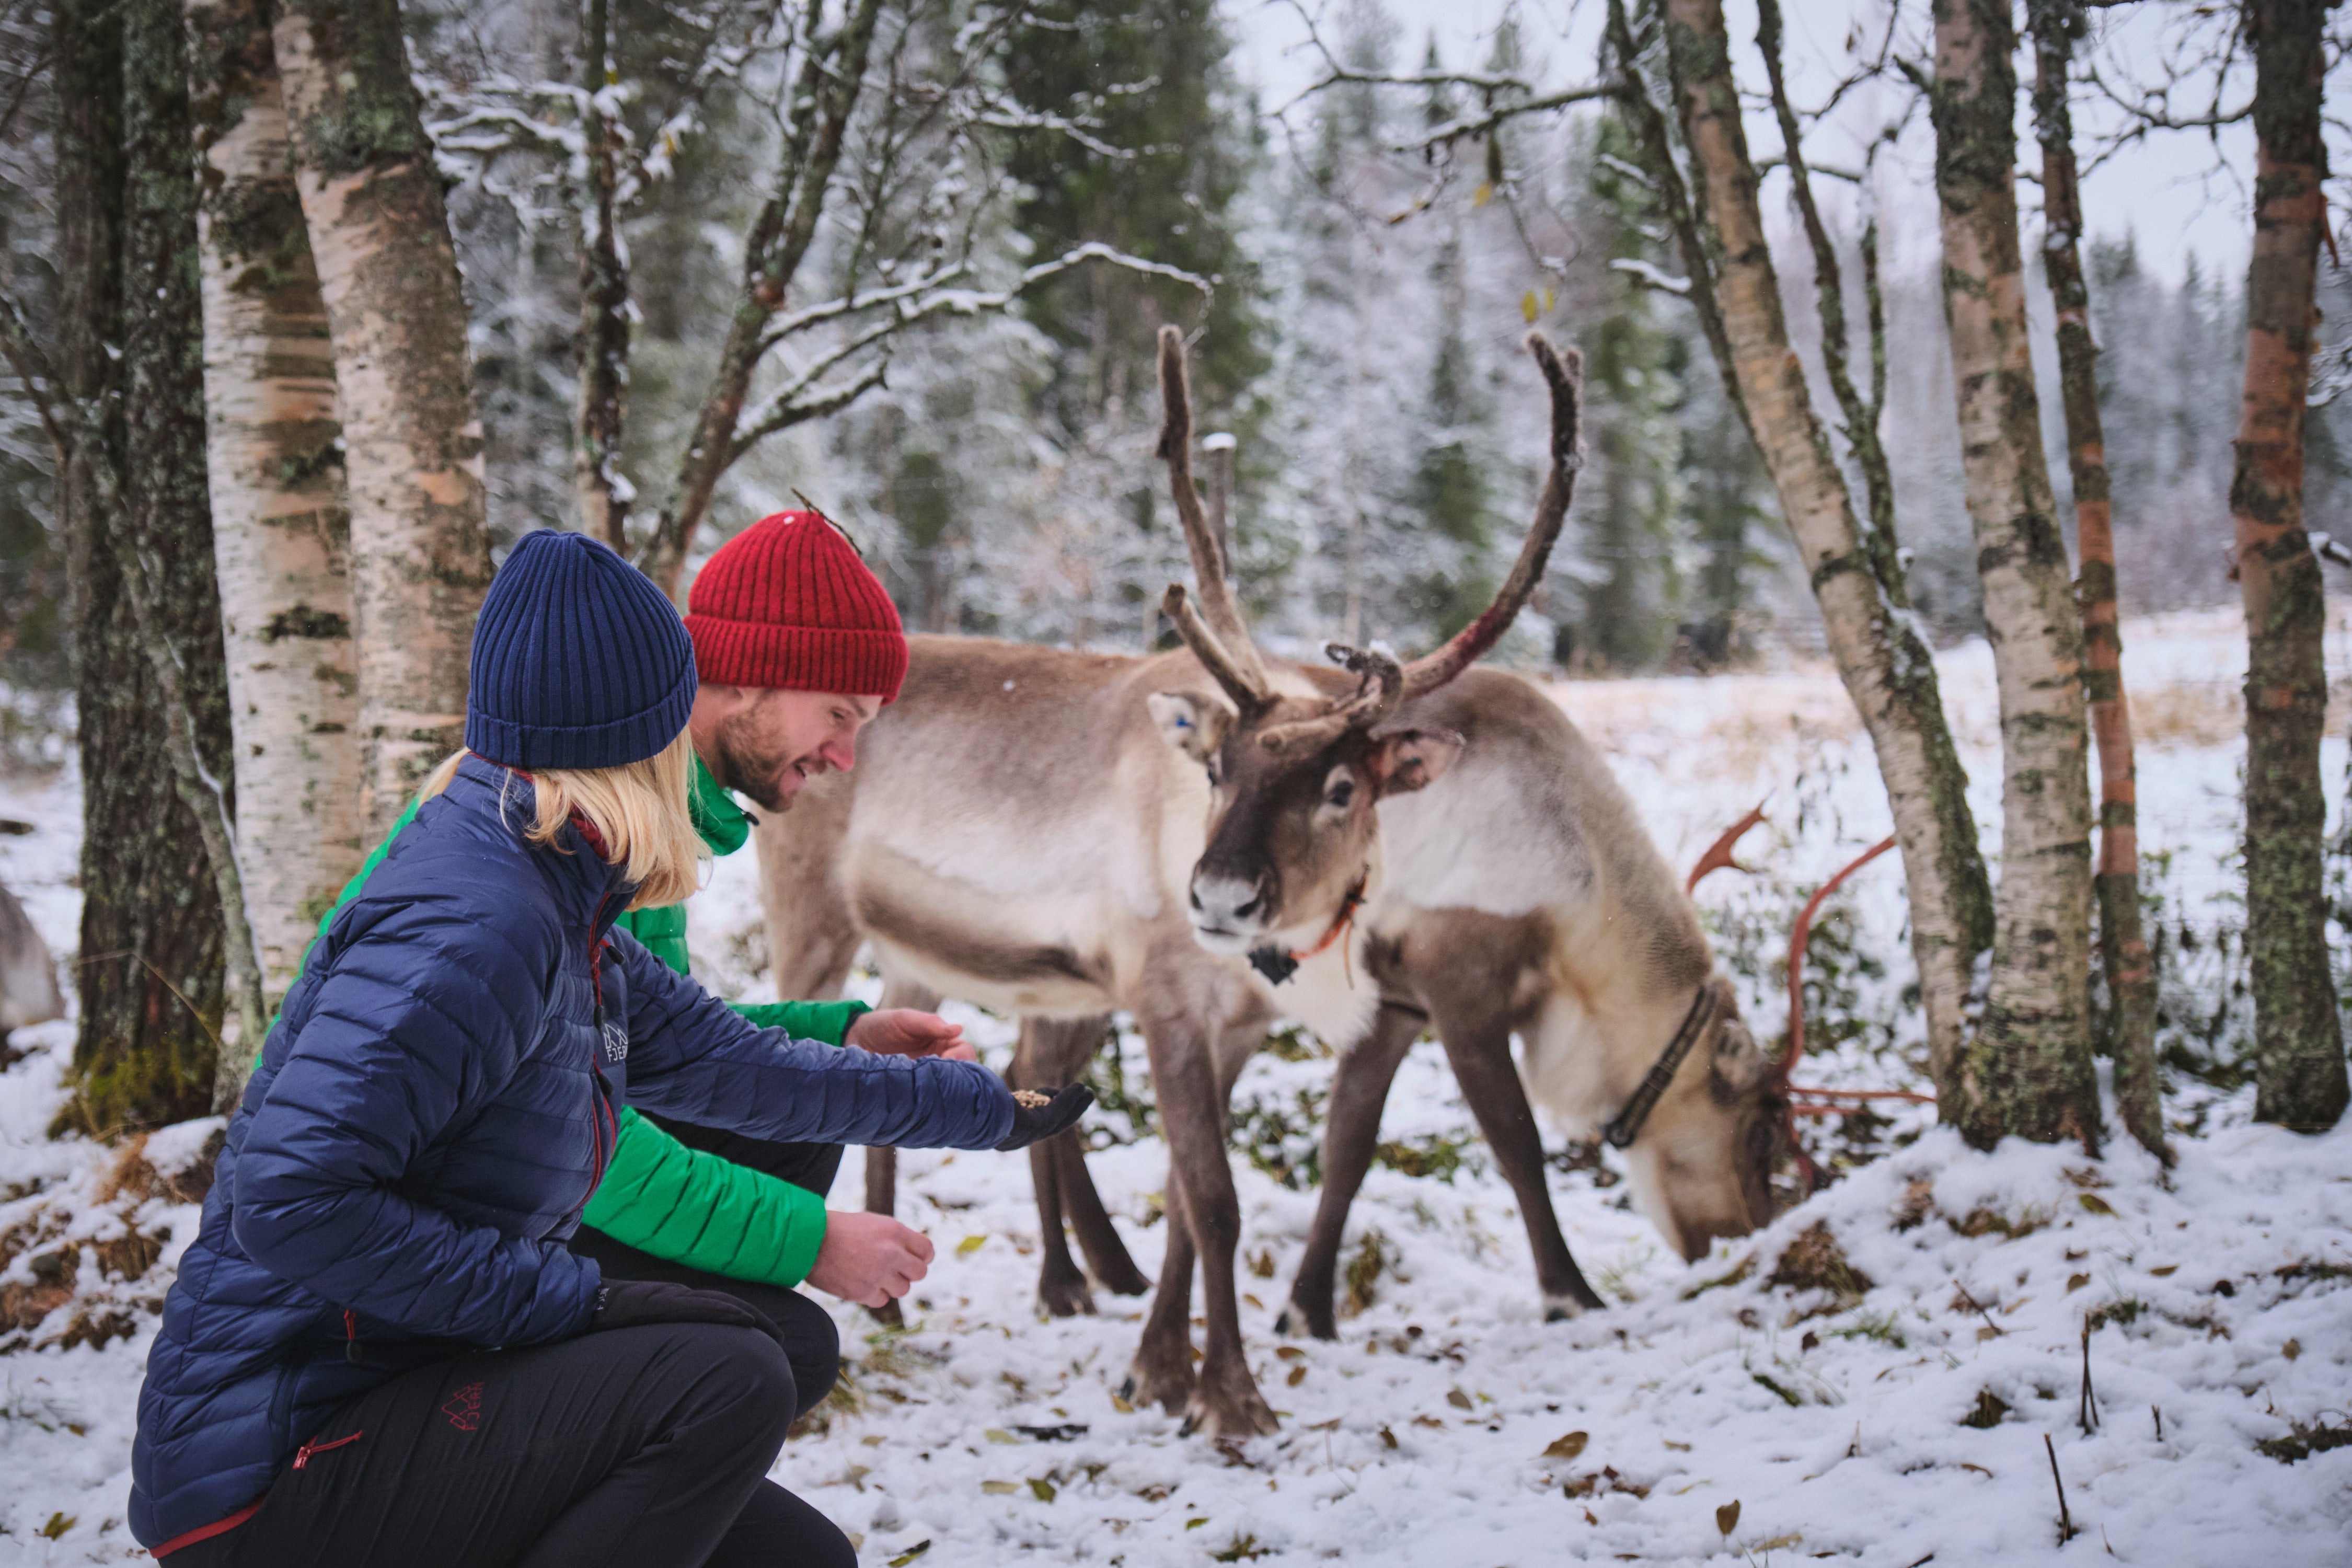 Feeding Finnish reindeer in a snowy forest featuring Fjern Aktiv Jackets